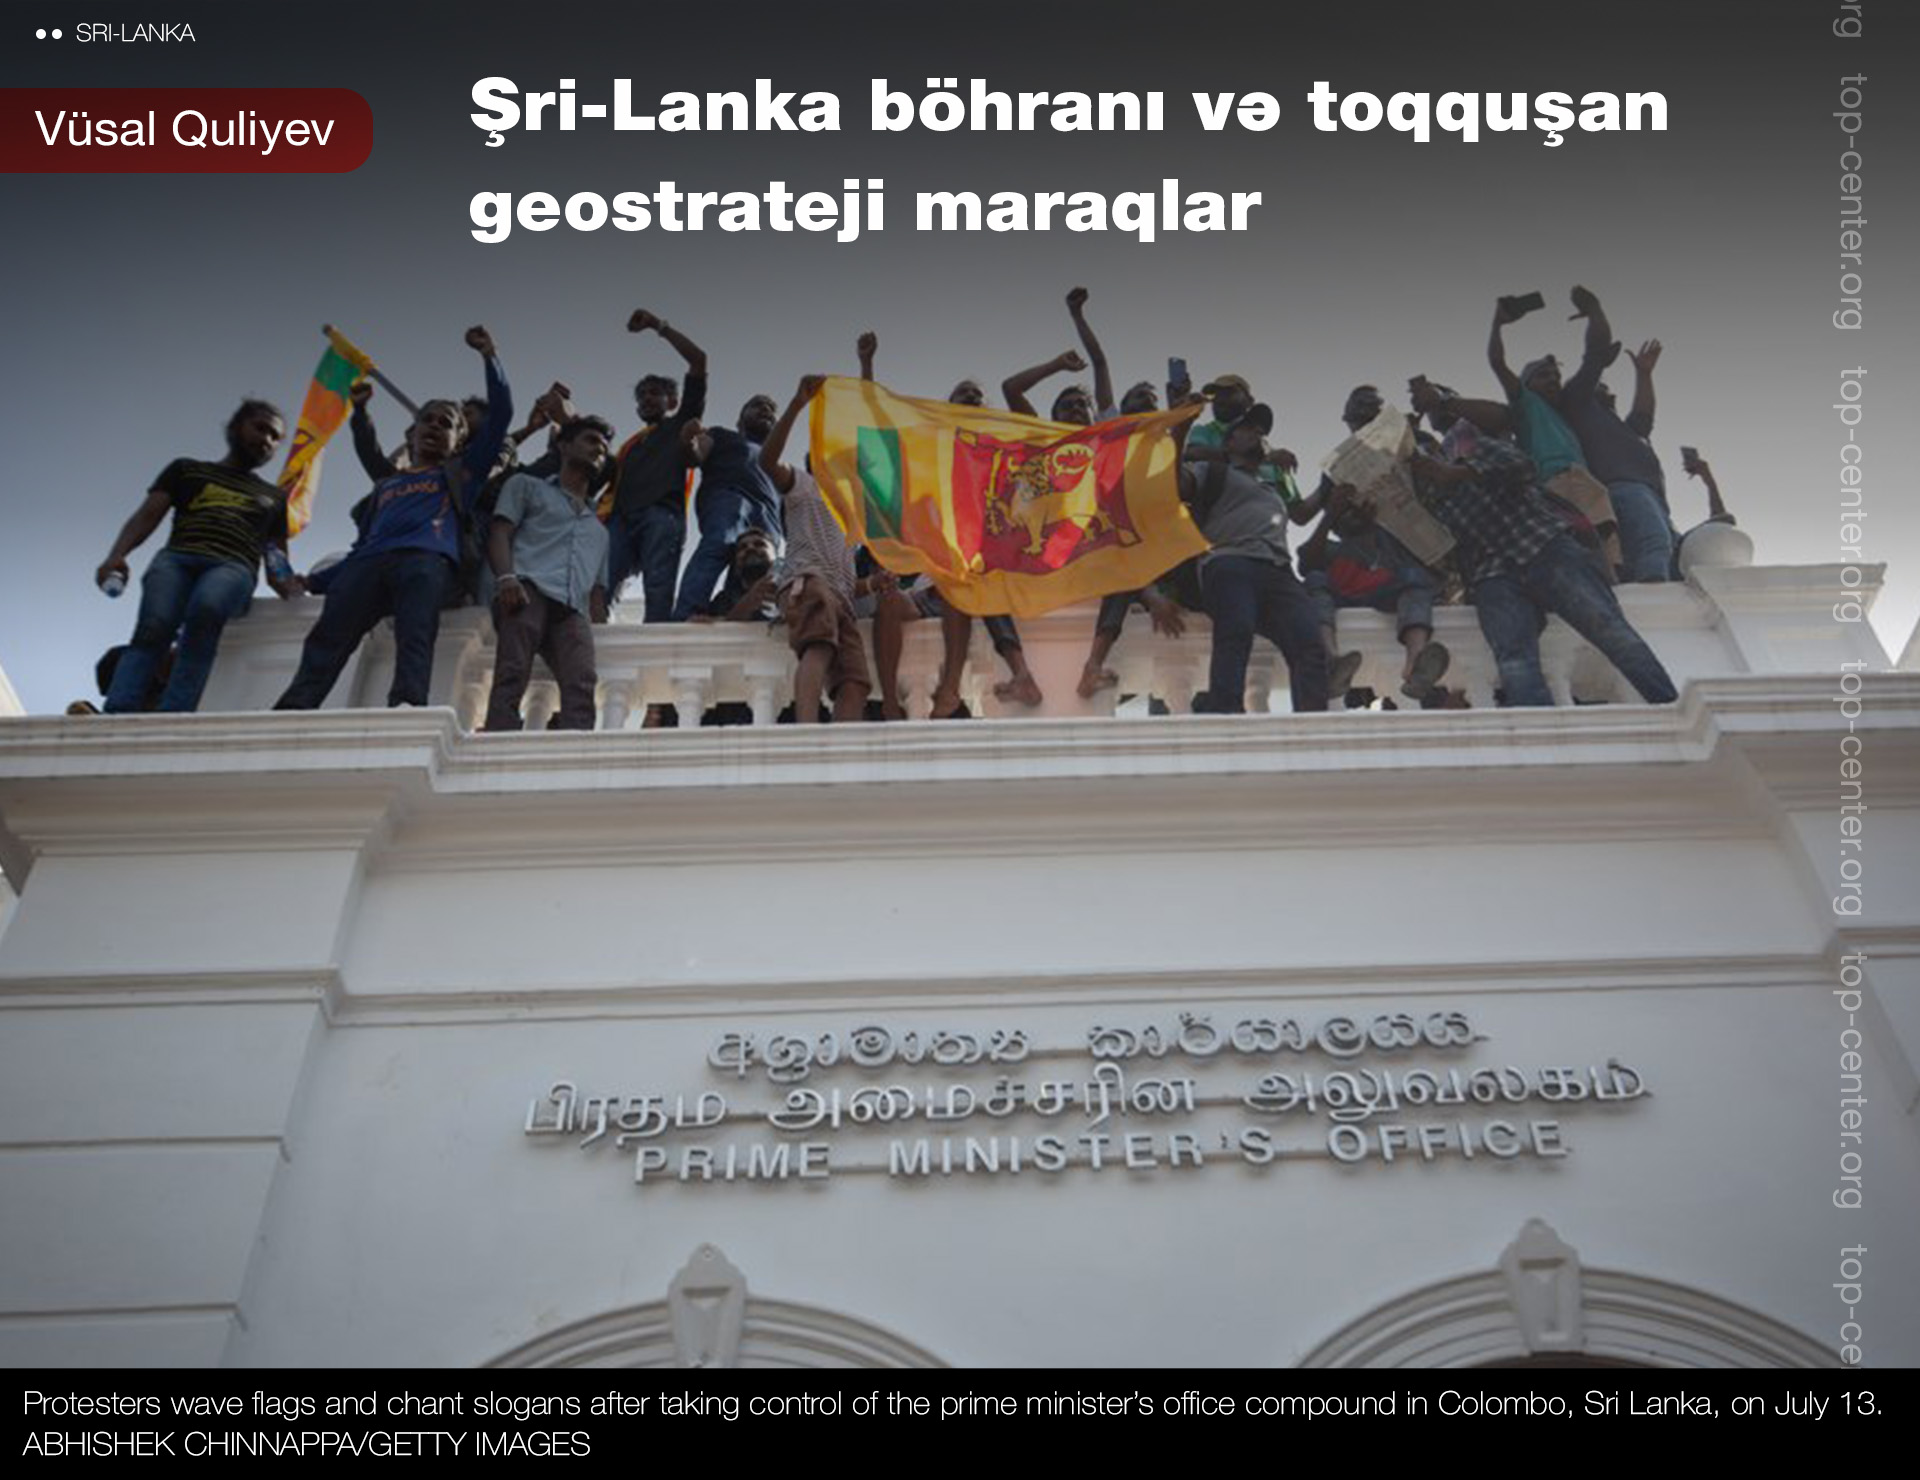 Crisis in Sri-Lanka and colliding geostrategic interests